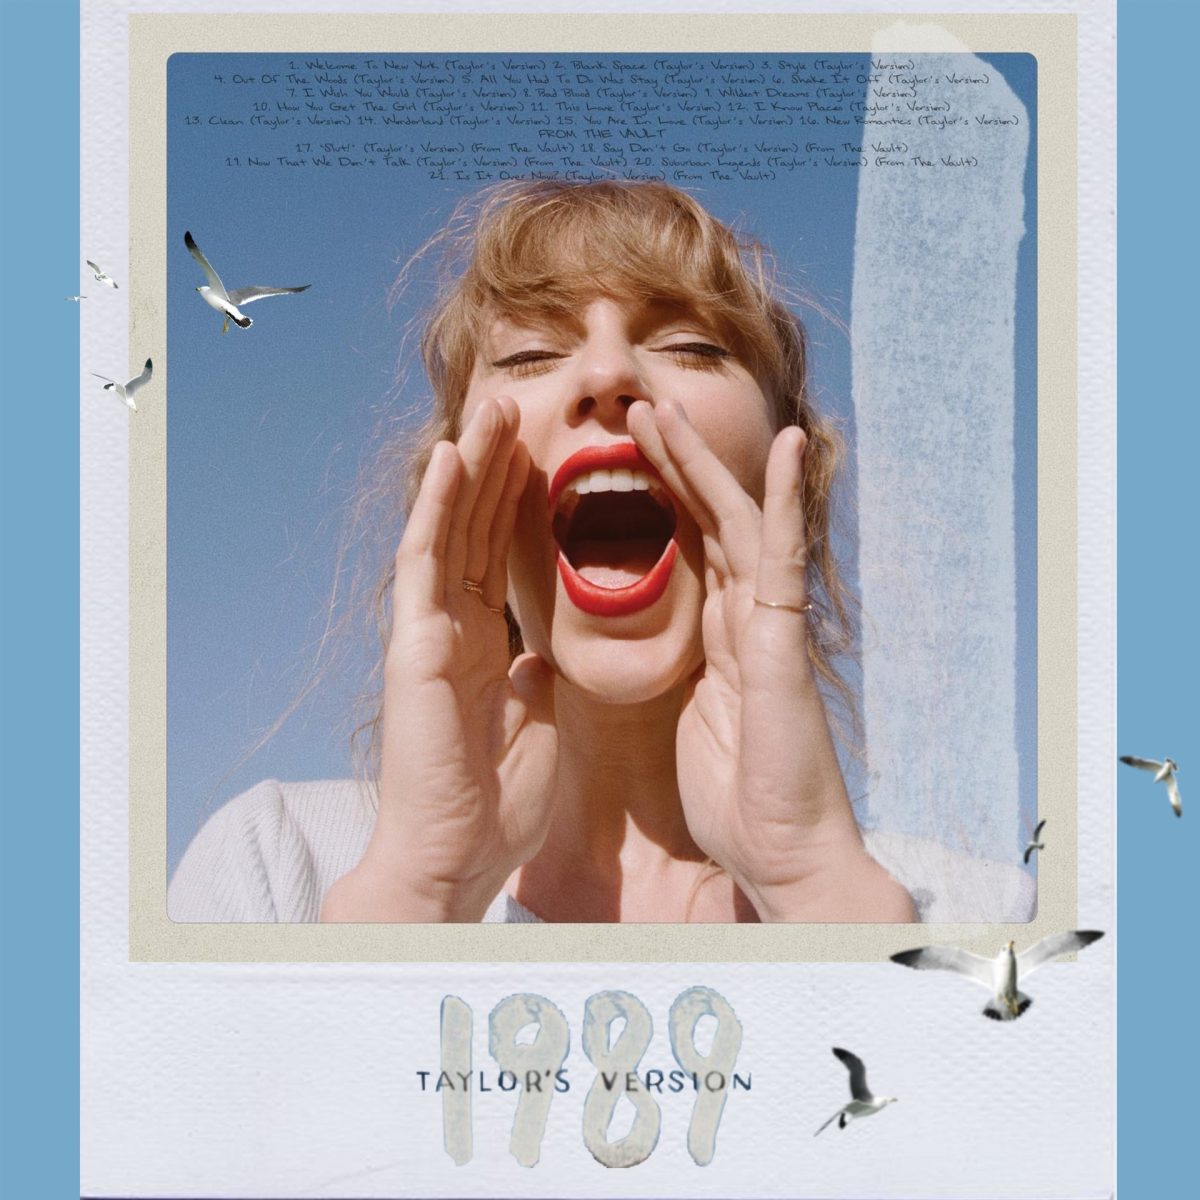 1989 (Taylors Version)